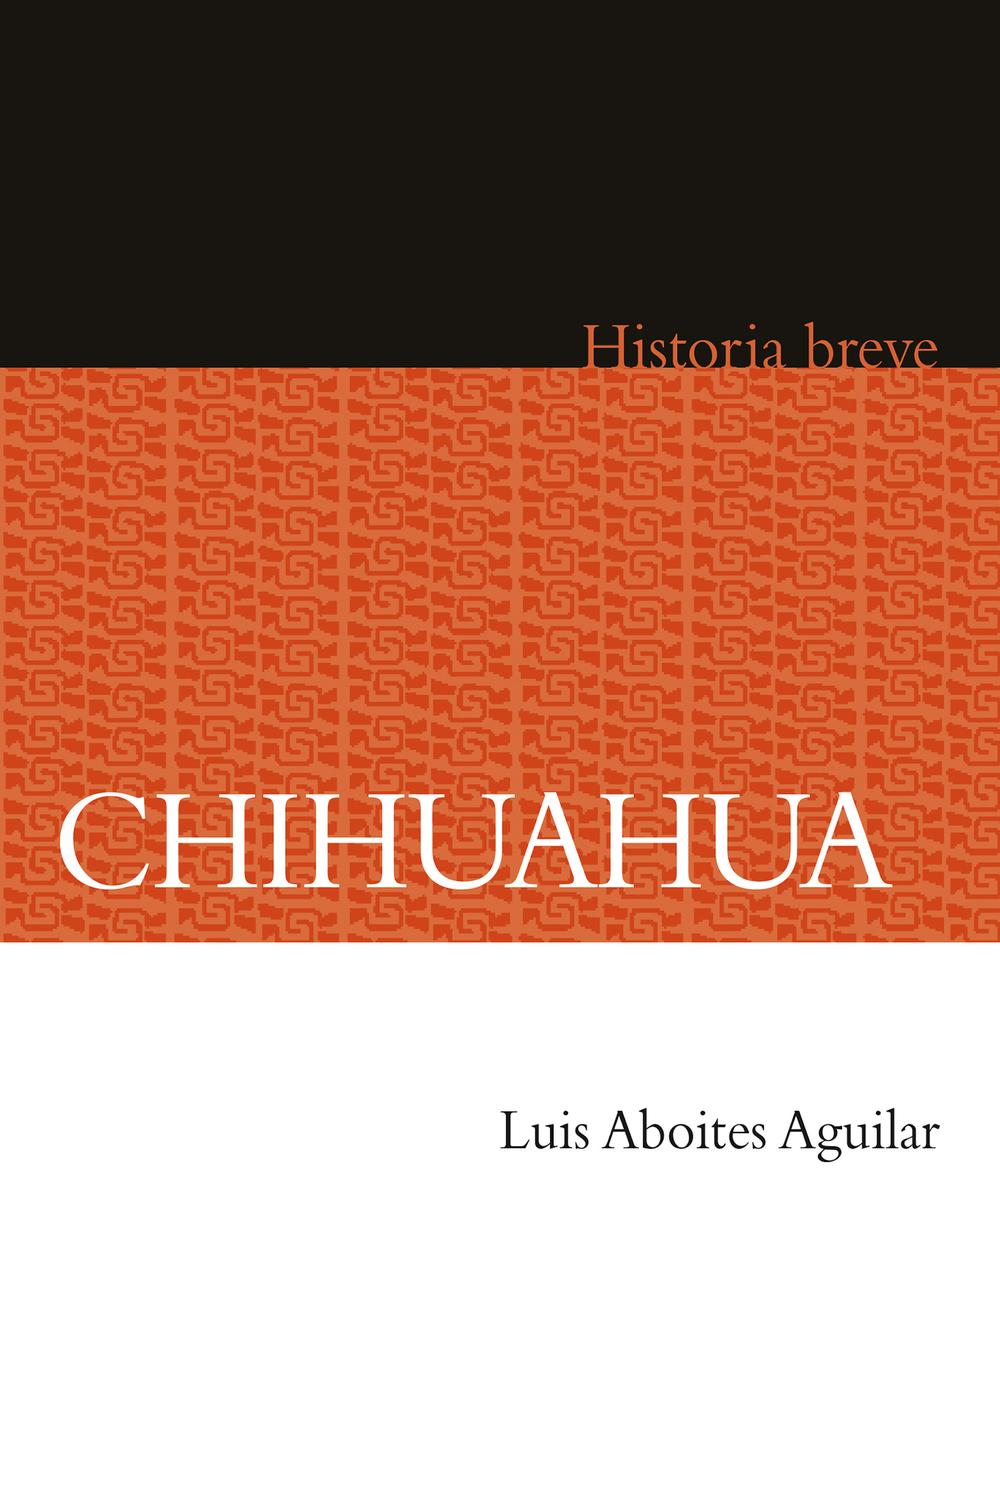 Chihuahua - Luis Aboites Aguilar, Alicia Hernández Chávez, Yovana Celaya Nández